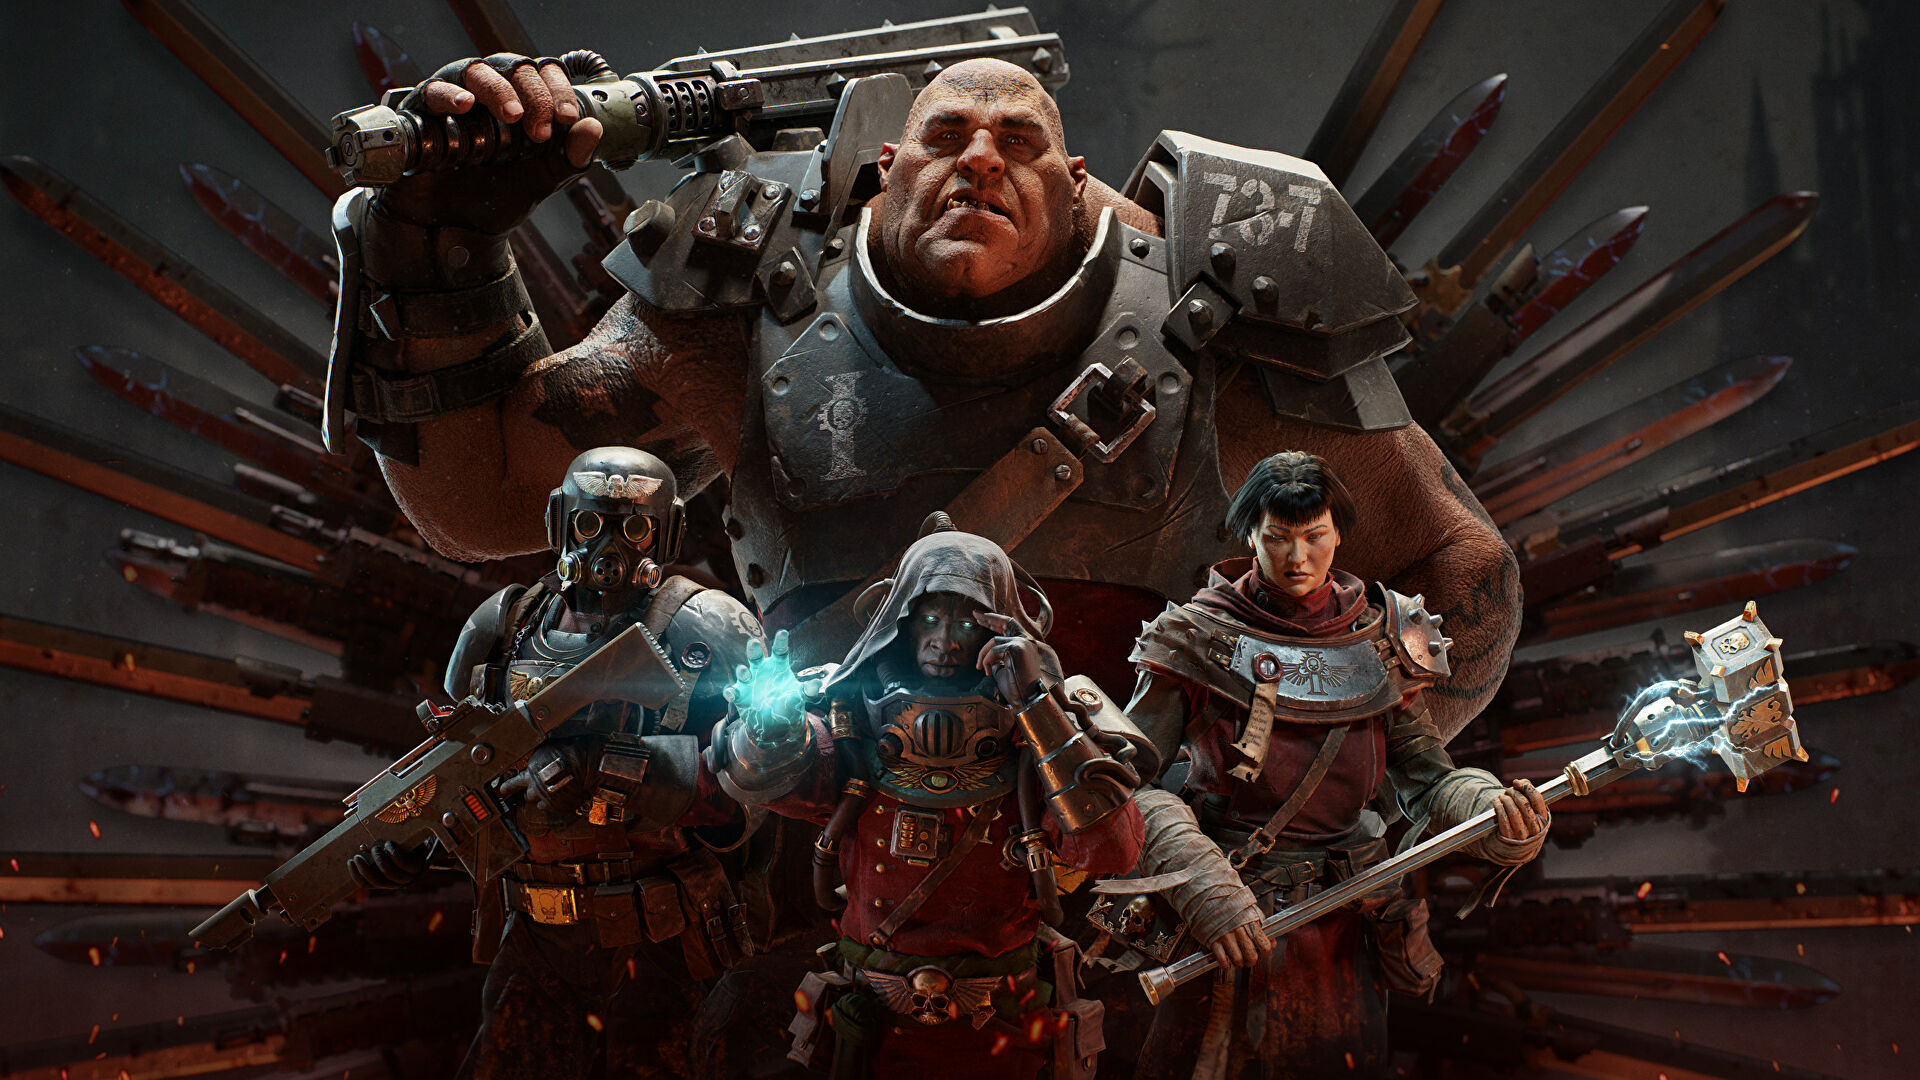 Warhammer 40,000: Darktide’s beta has been updated to introduce crafting